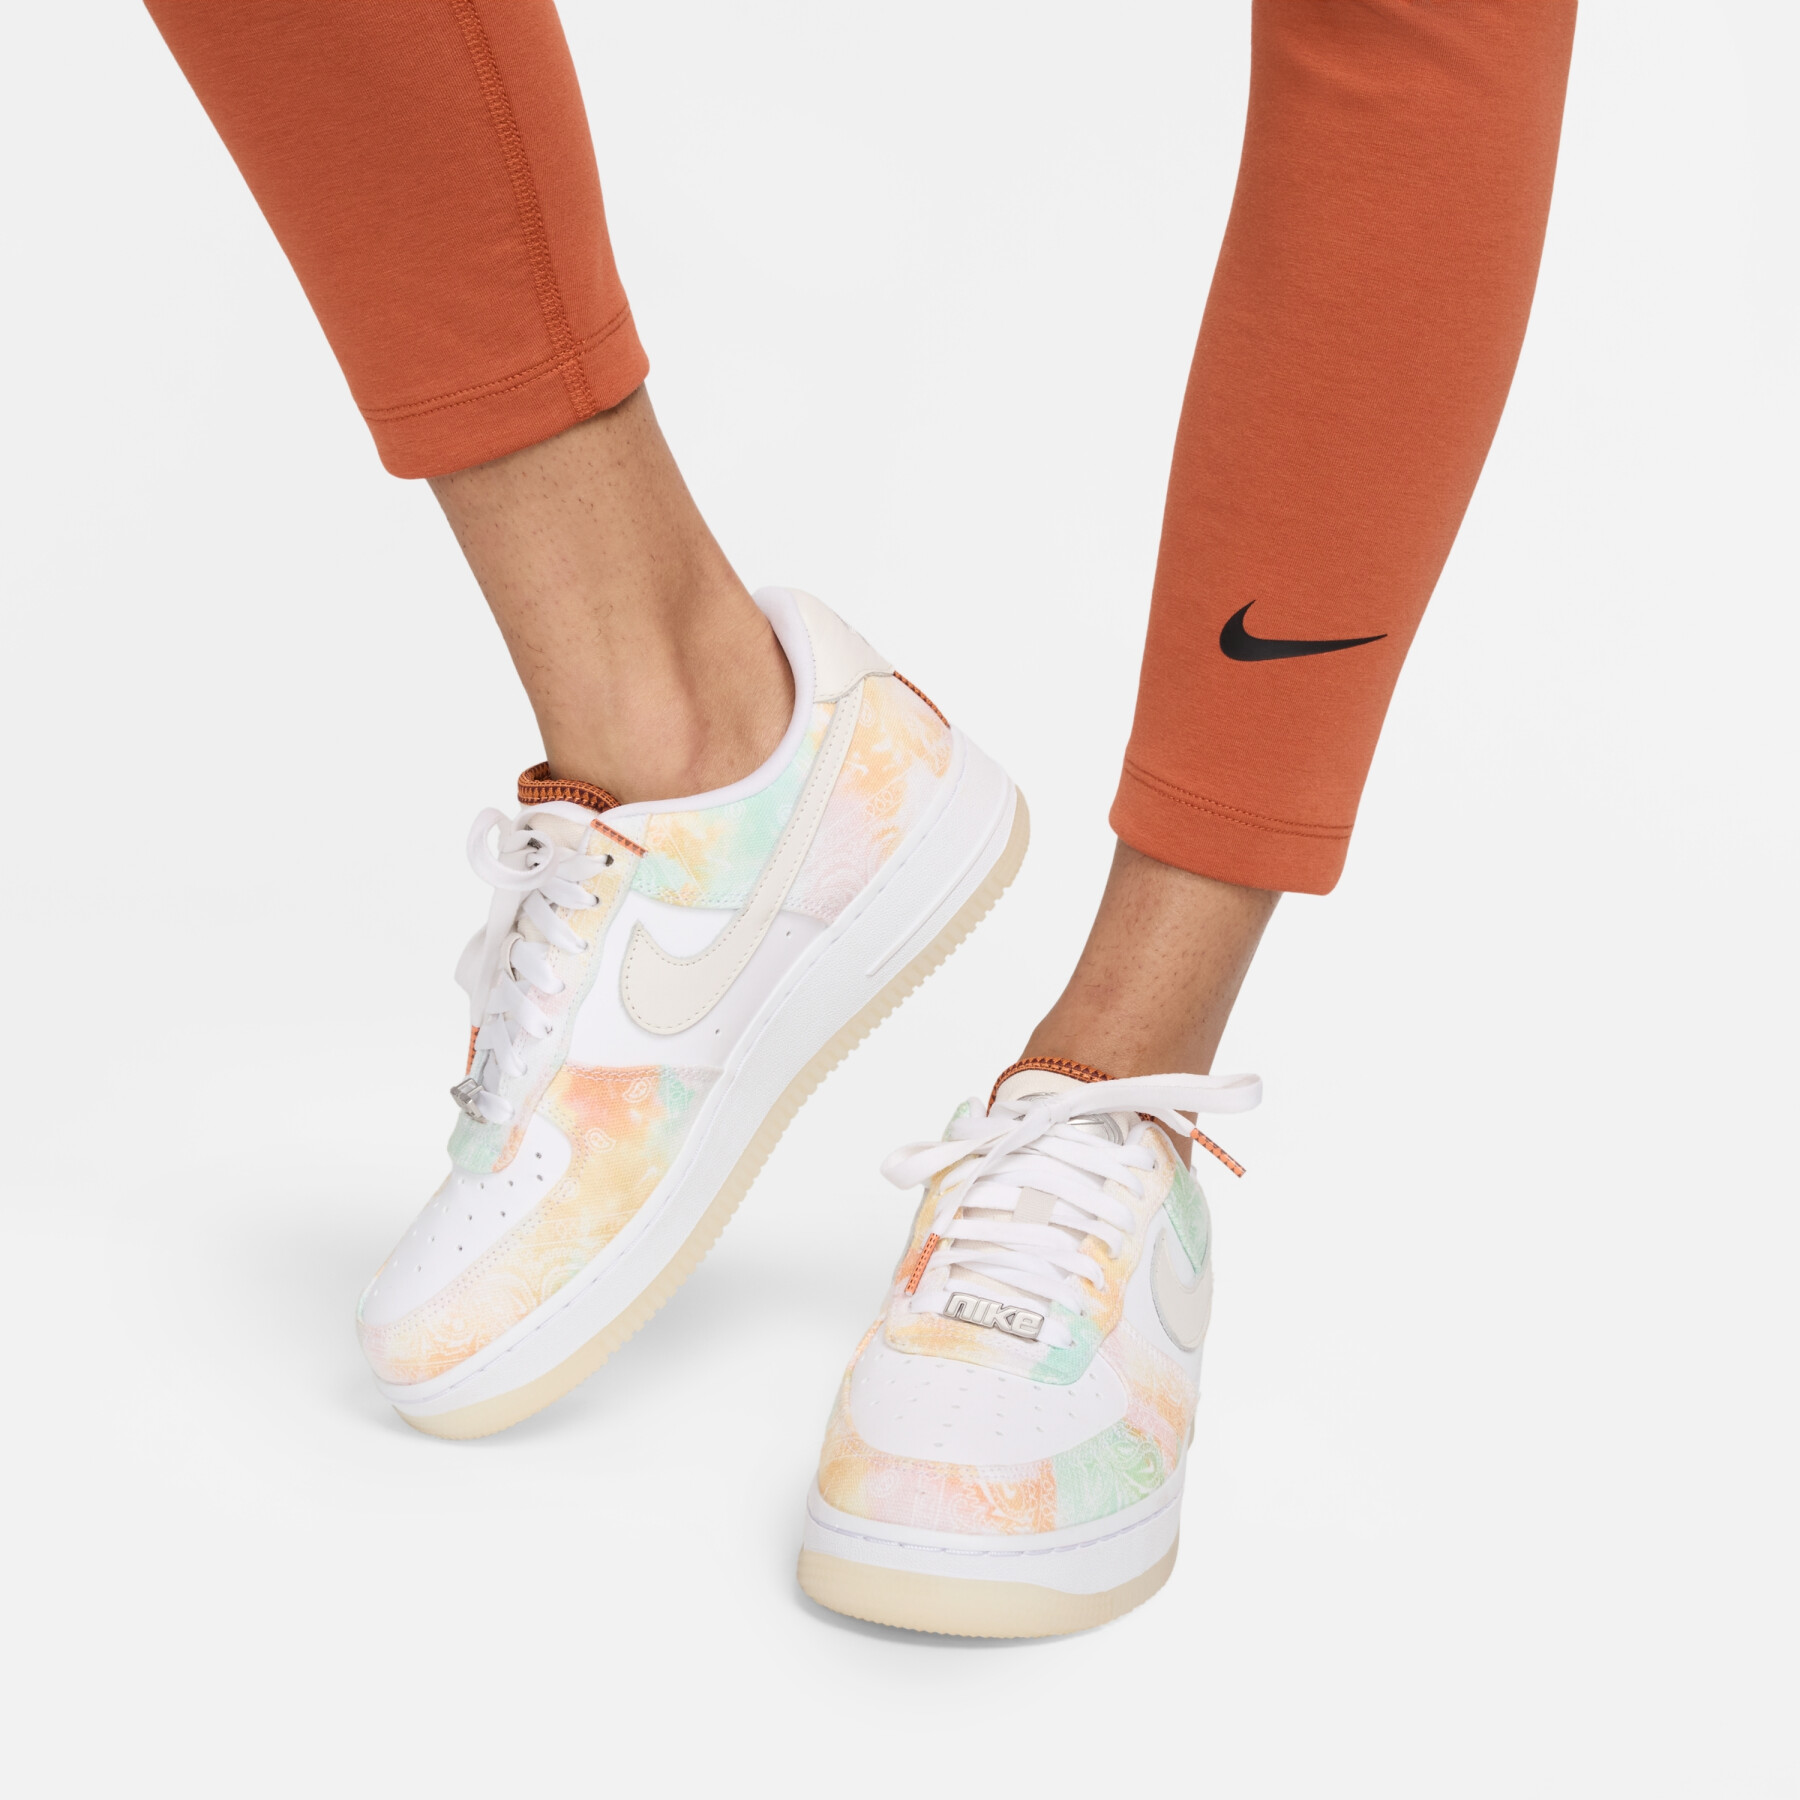 Legging 7/8 para mujer Nike Classics